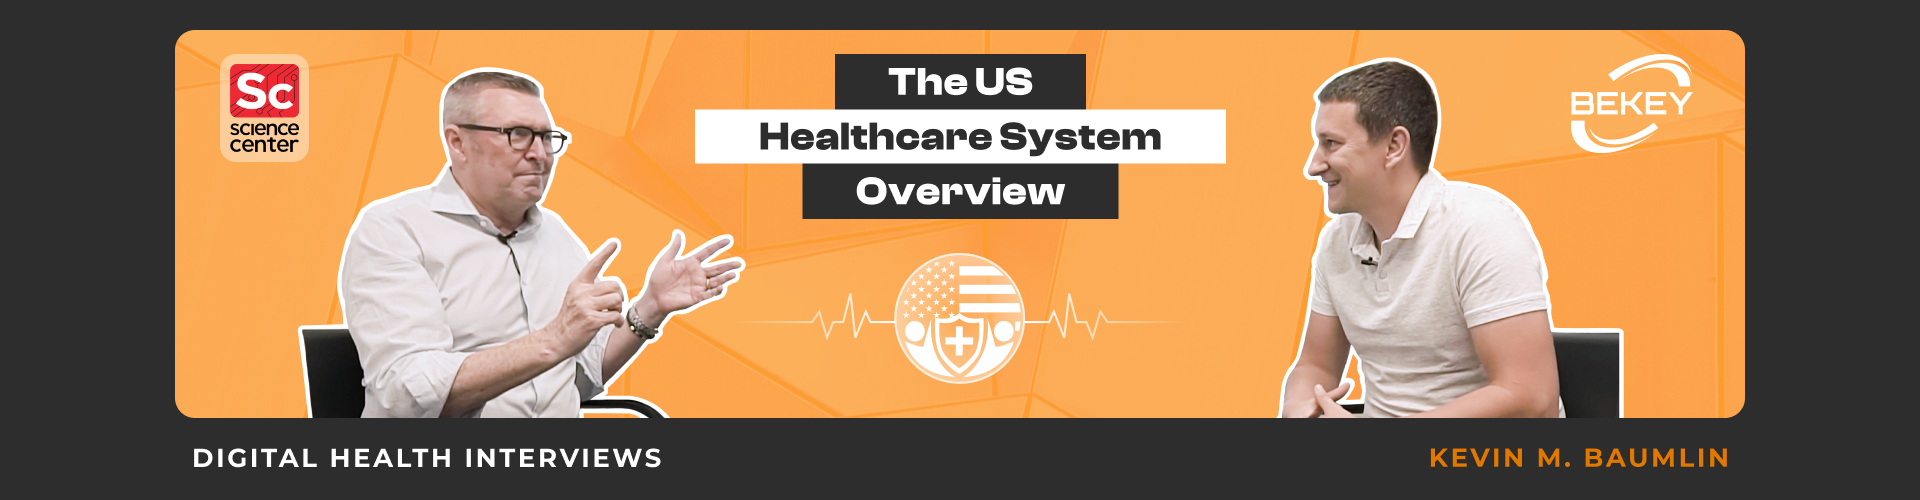 The US Healthcare System Overview. Digital Health Interviews: Kevin M. Baumlin - image